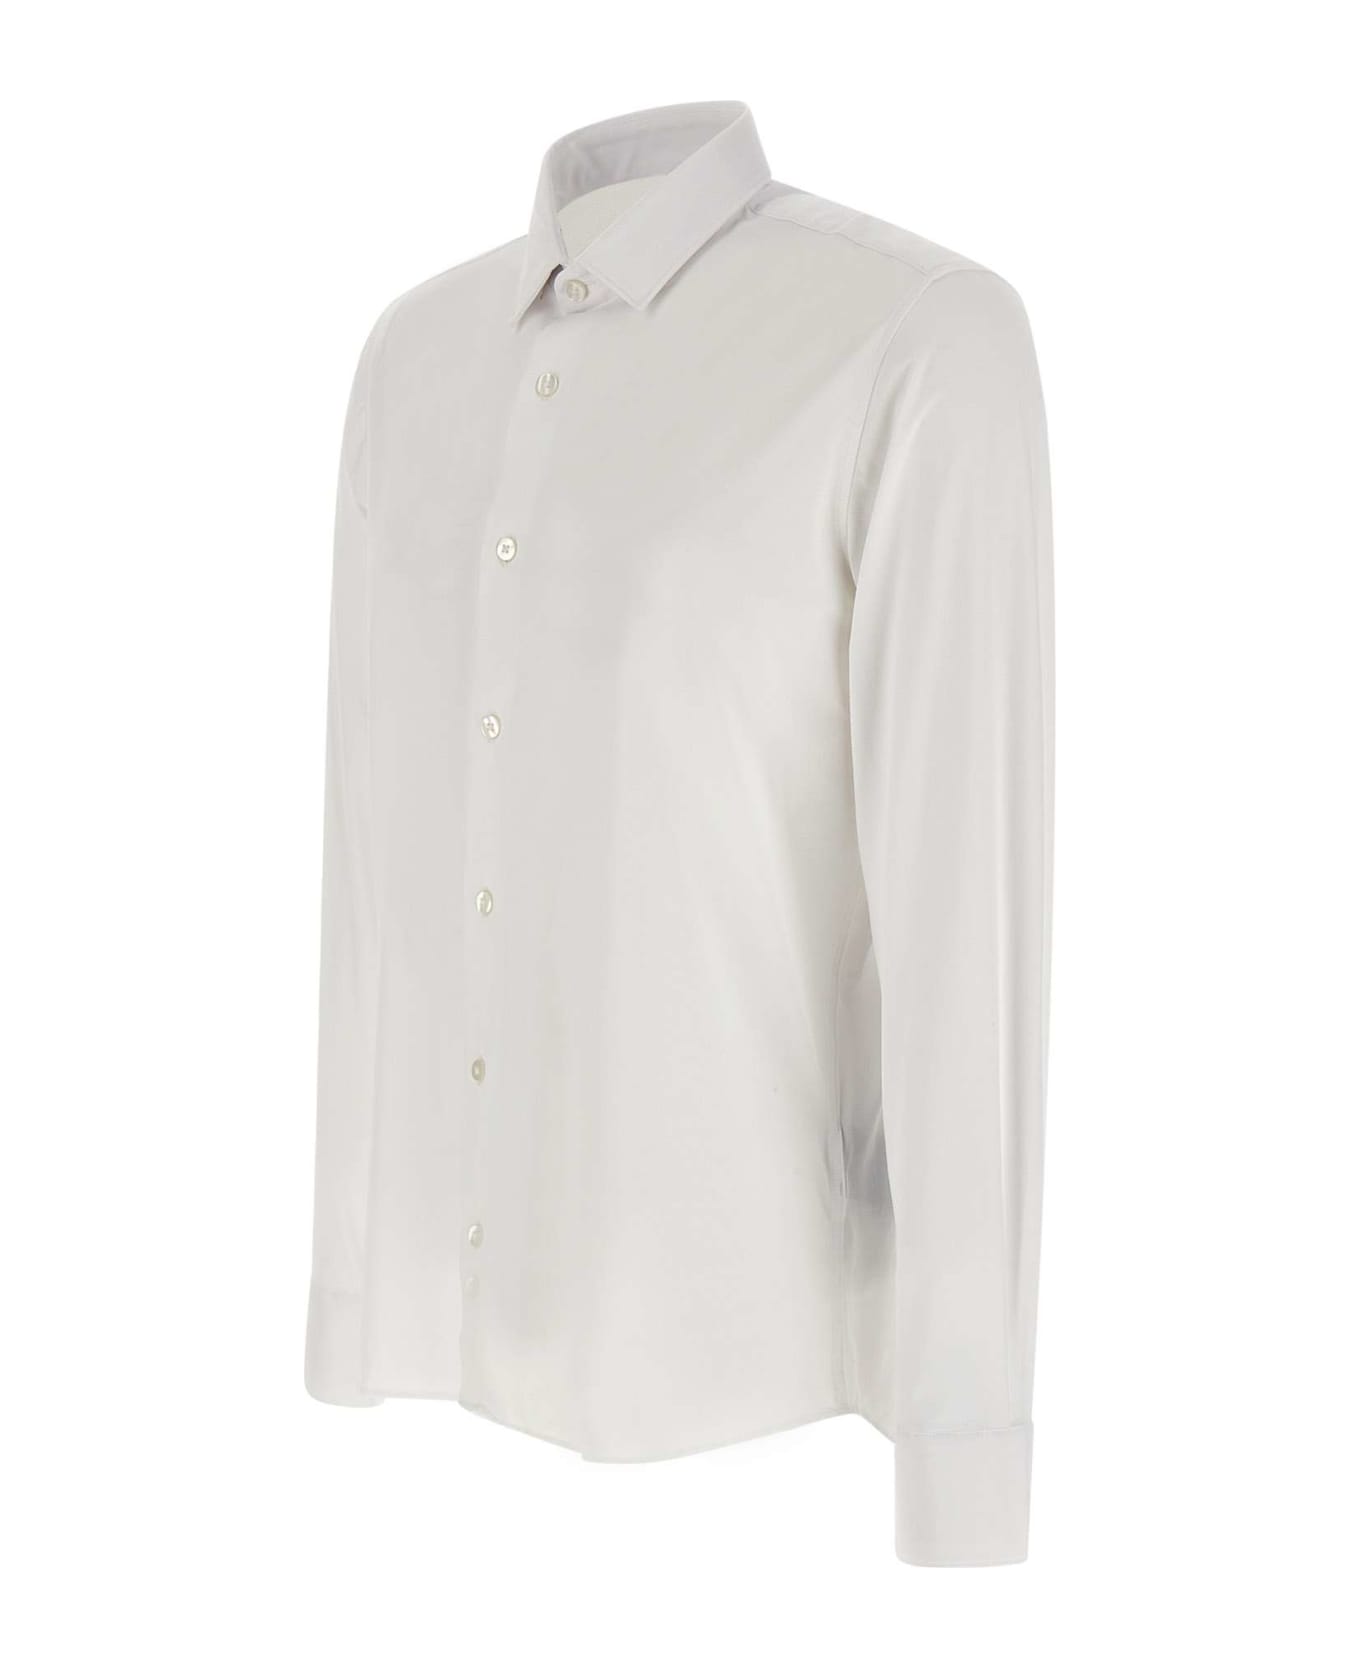 RRD - Roberto Ricci Design "oxford Open" Shirt - WHITE